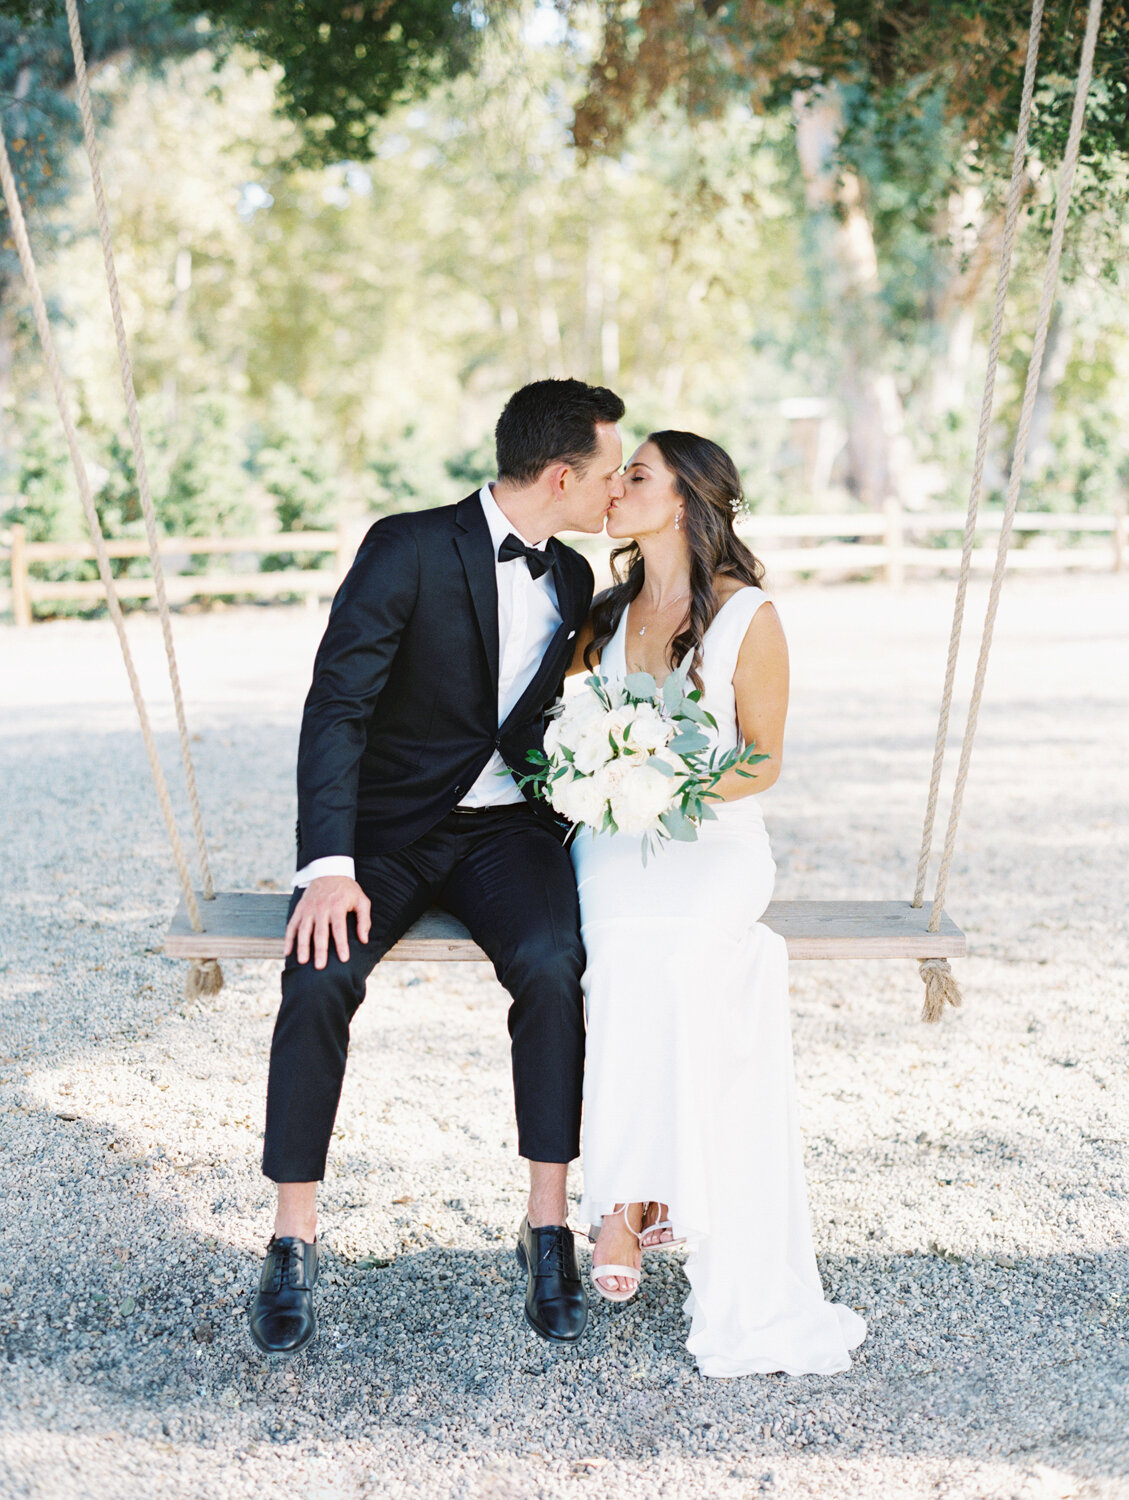 wisteria-photography.com | Wisteria Photography | Triunfo Creek Vineyards | Weddings Engagement | Southern California Photographer-18.jpg